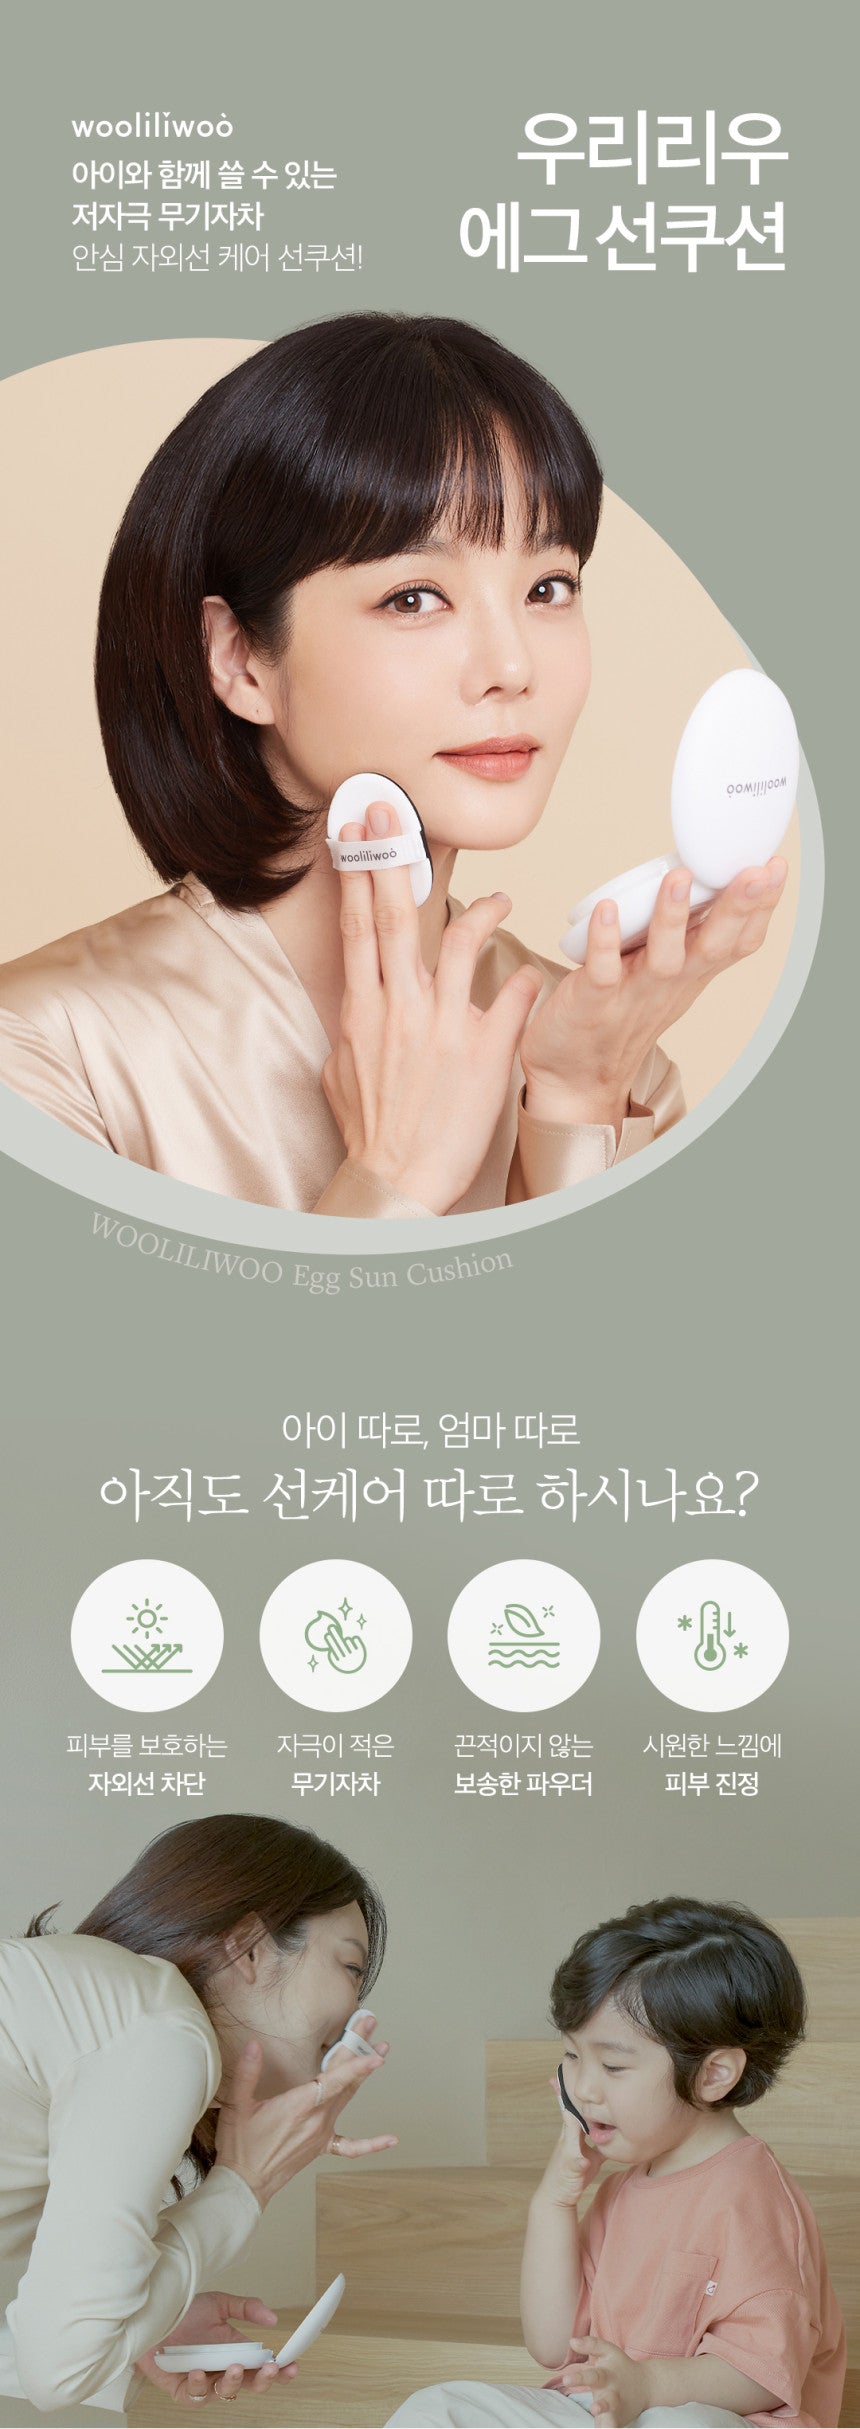 Wooliliwoo Egg Sun Cushion SPF50+ PA++++ Foundation Makeup Base Protects UV rays Skincare 18g Beauty Director Chaelim